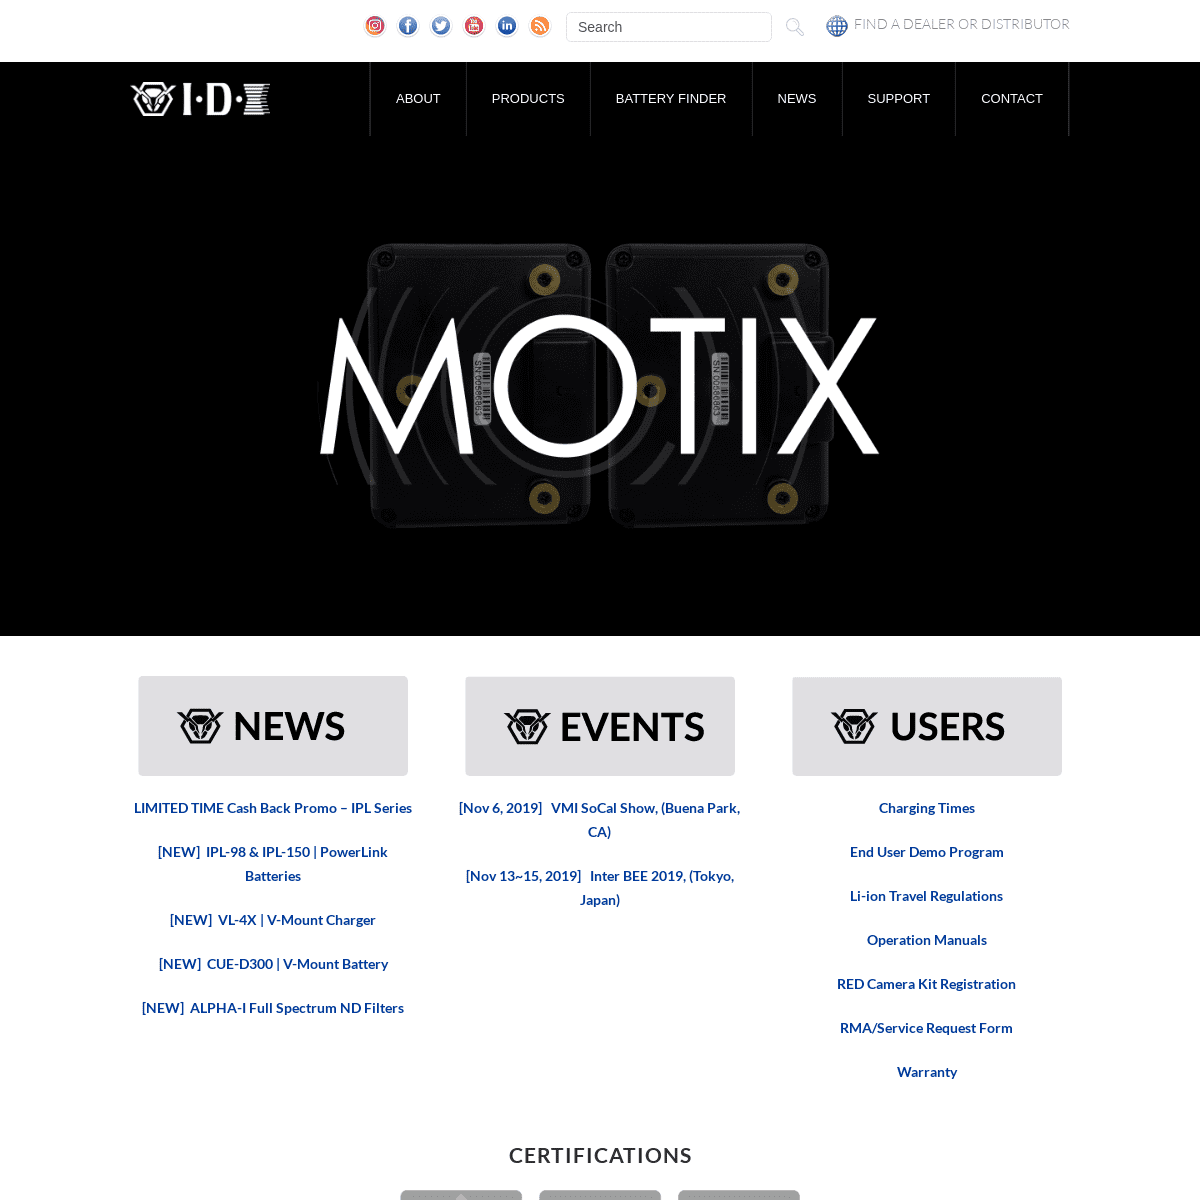 A complete backup of idxtek.com